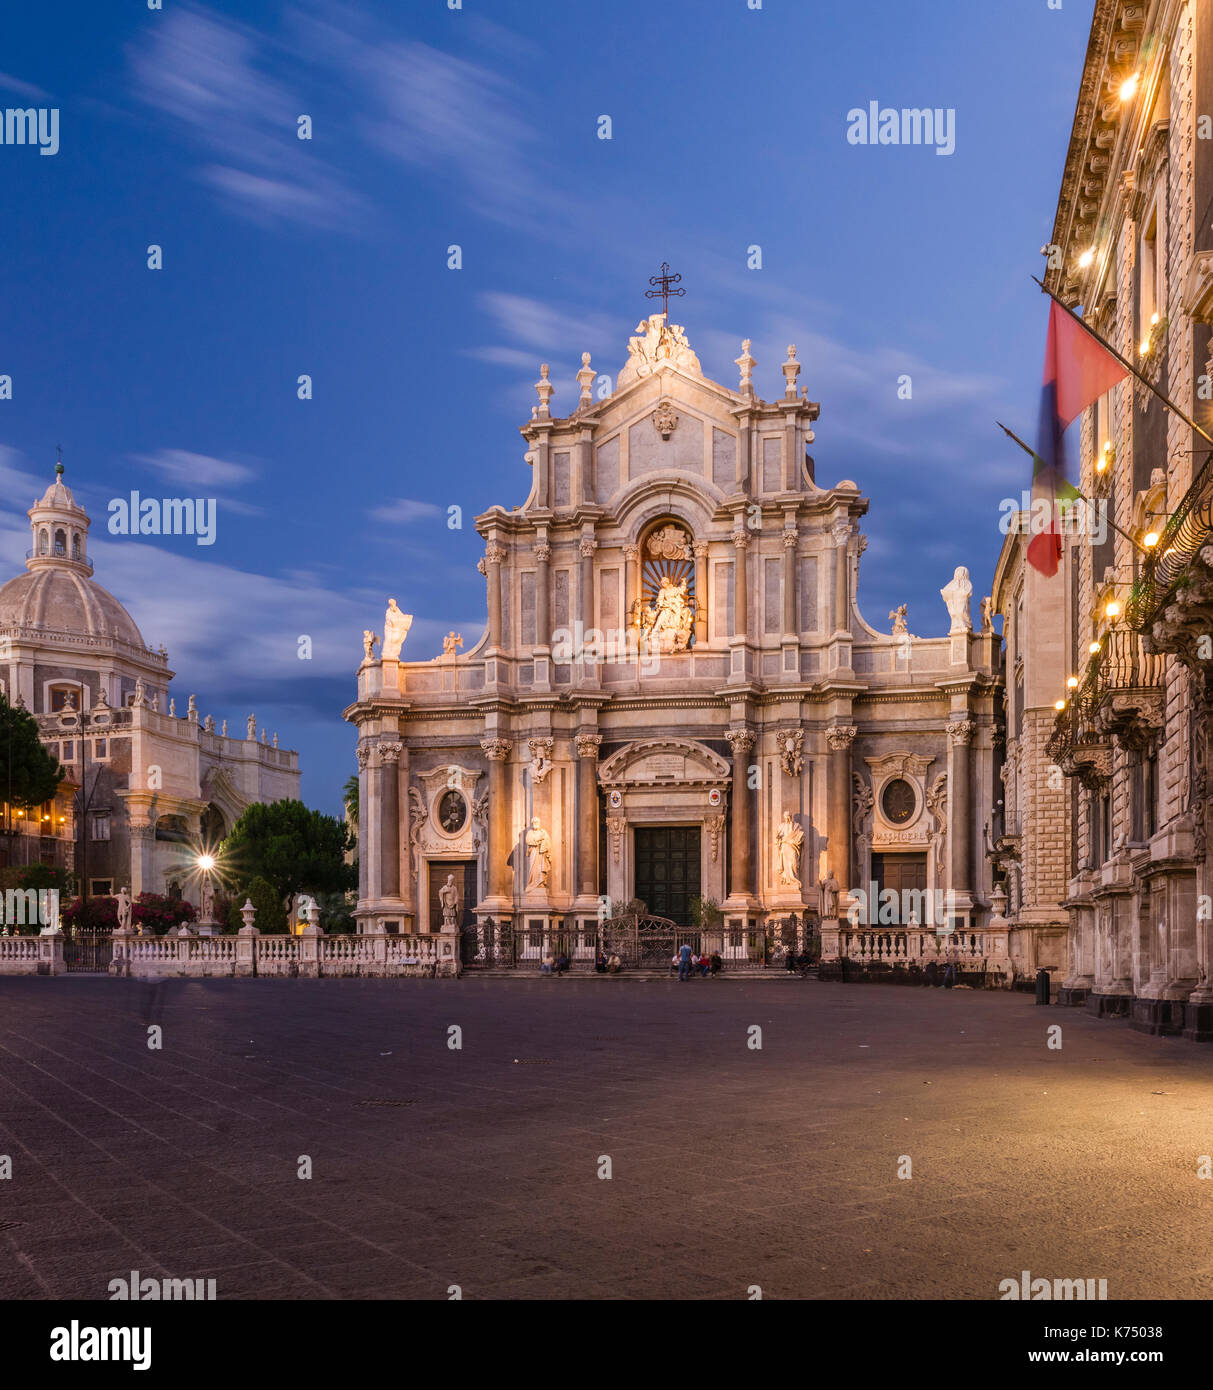 Piazza del Duomo, Cathedral of Sant' Agata, dusk, Catania, Sicily, Italy Stock Photo